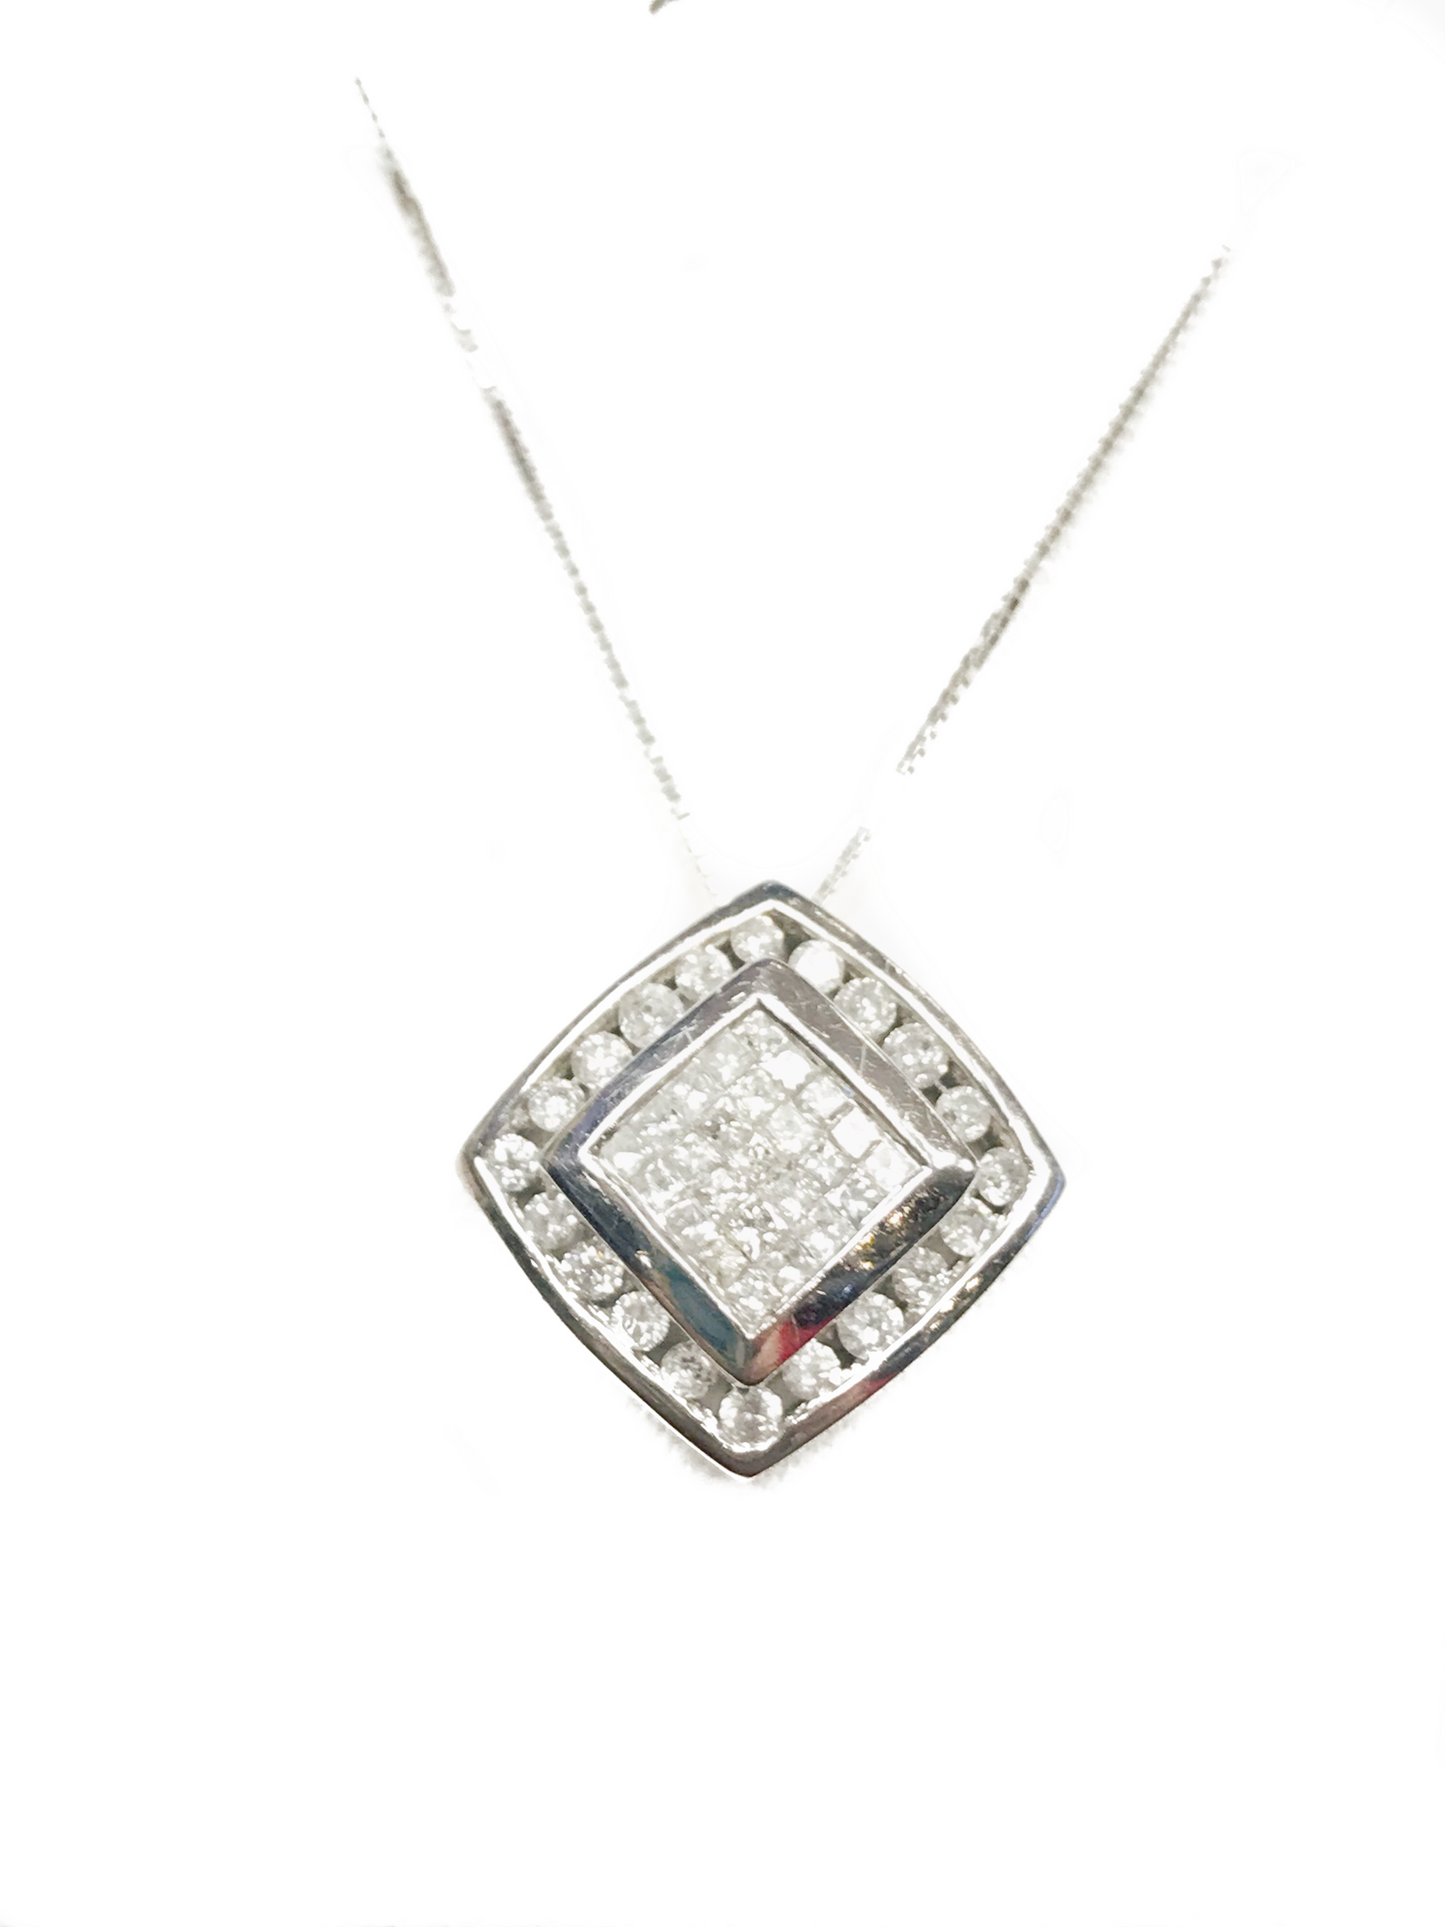 NR2061 White gold diamond pendant